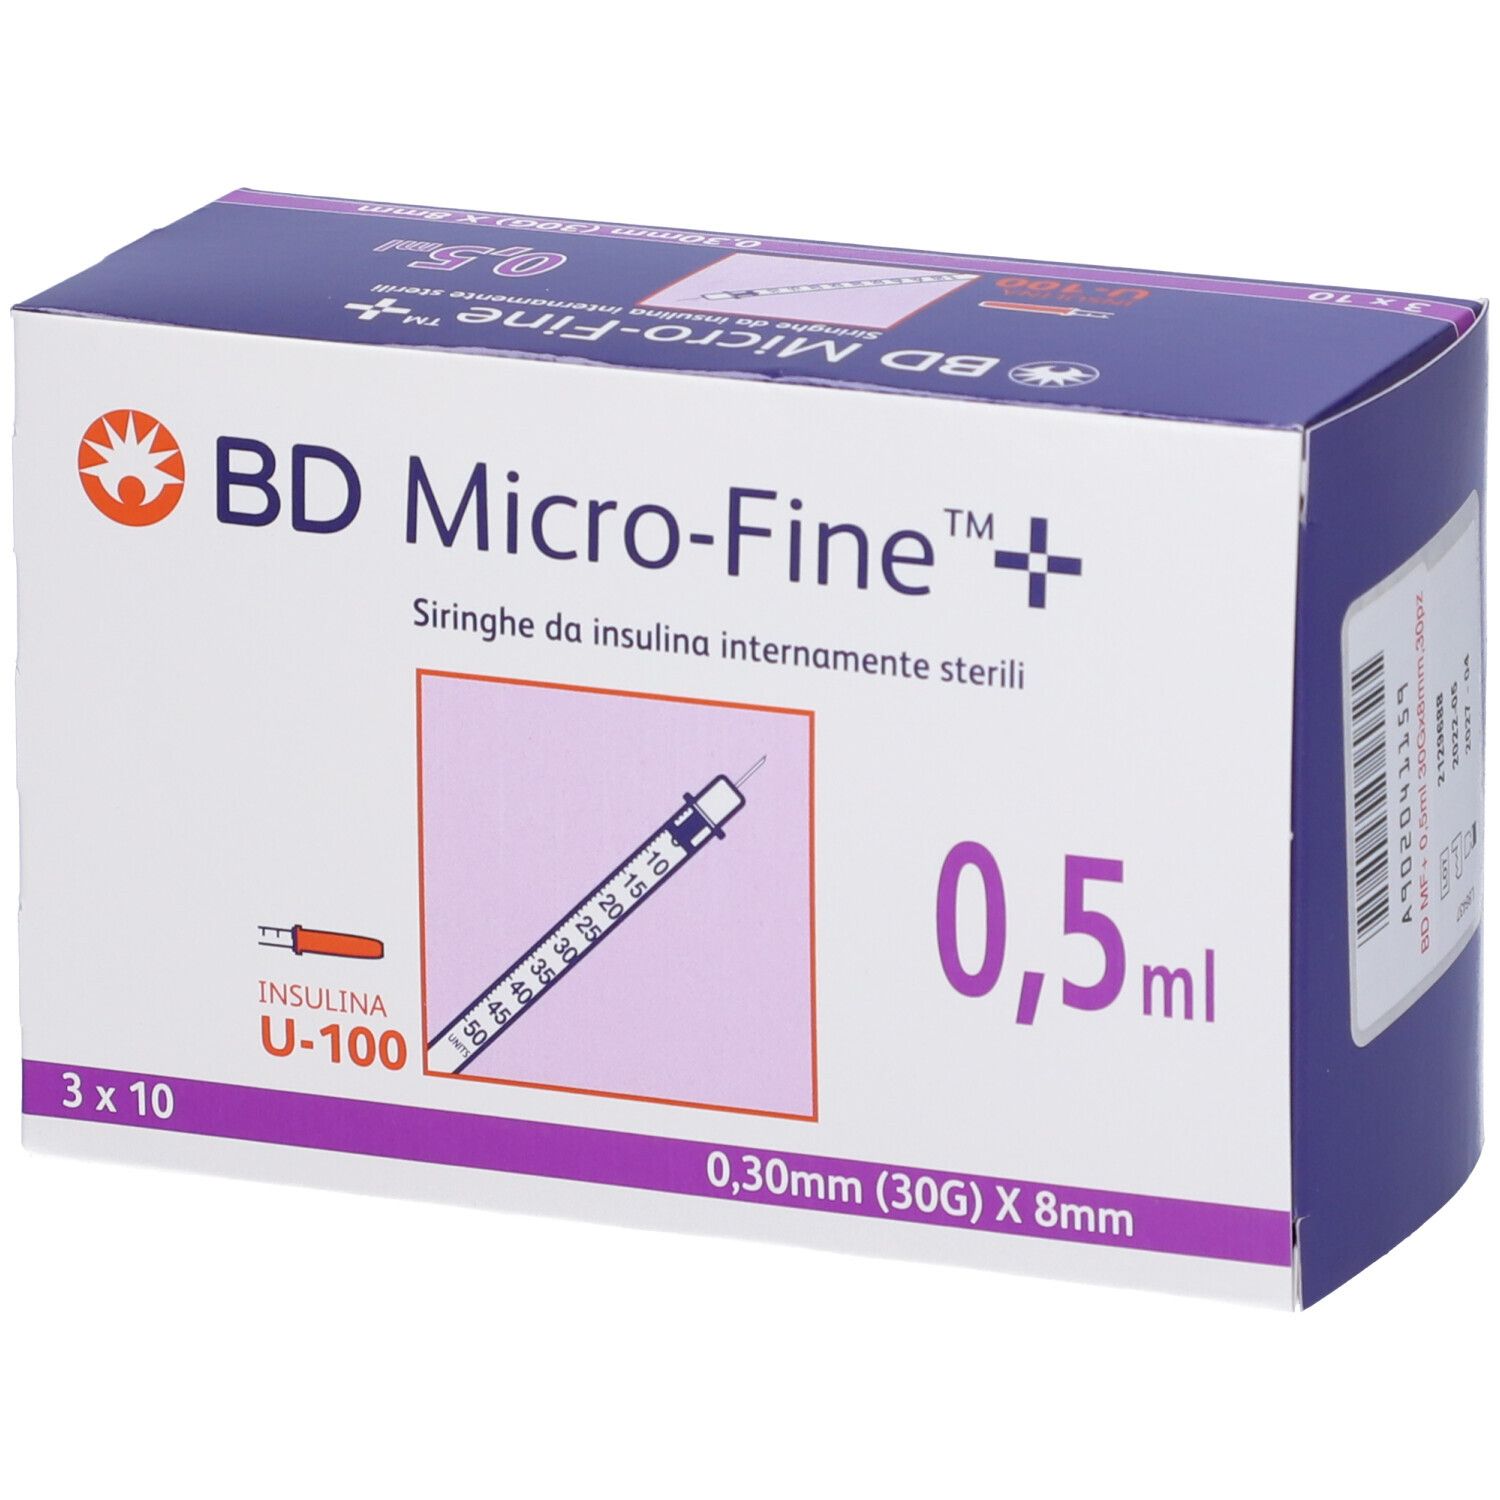 Image of BD Micro-Fine™+ Siringhe per insulina 0,5 ml 0,30 mm (30G) x 8 mm